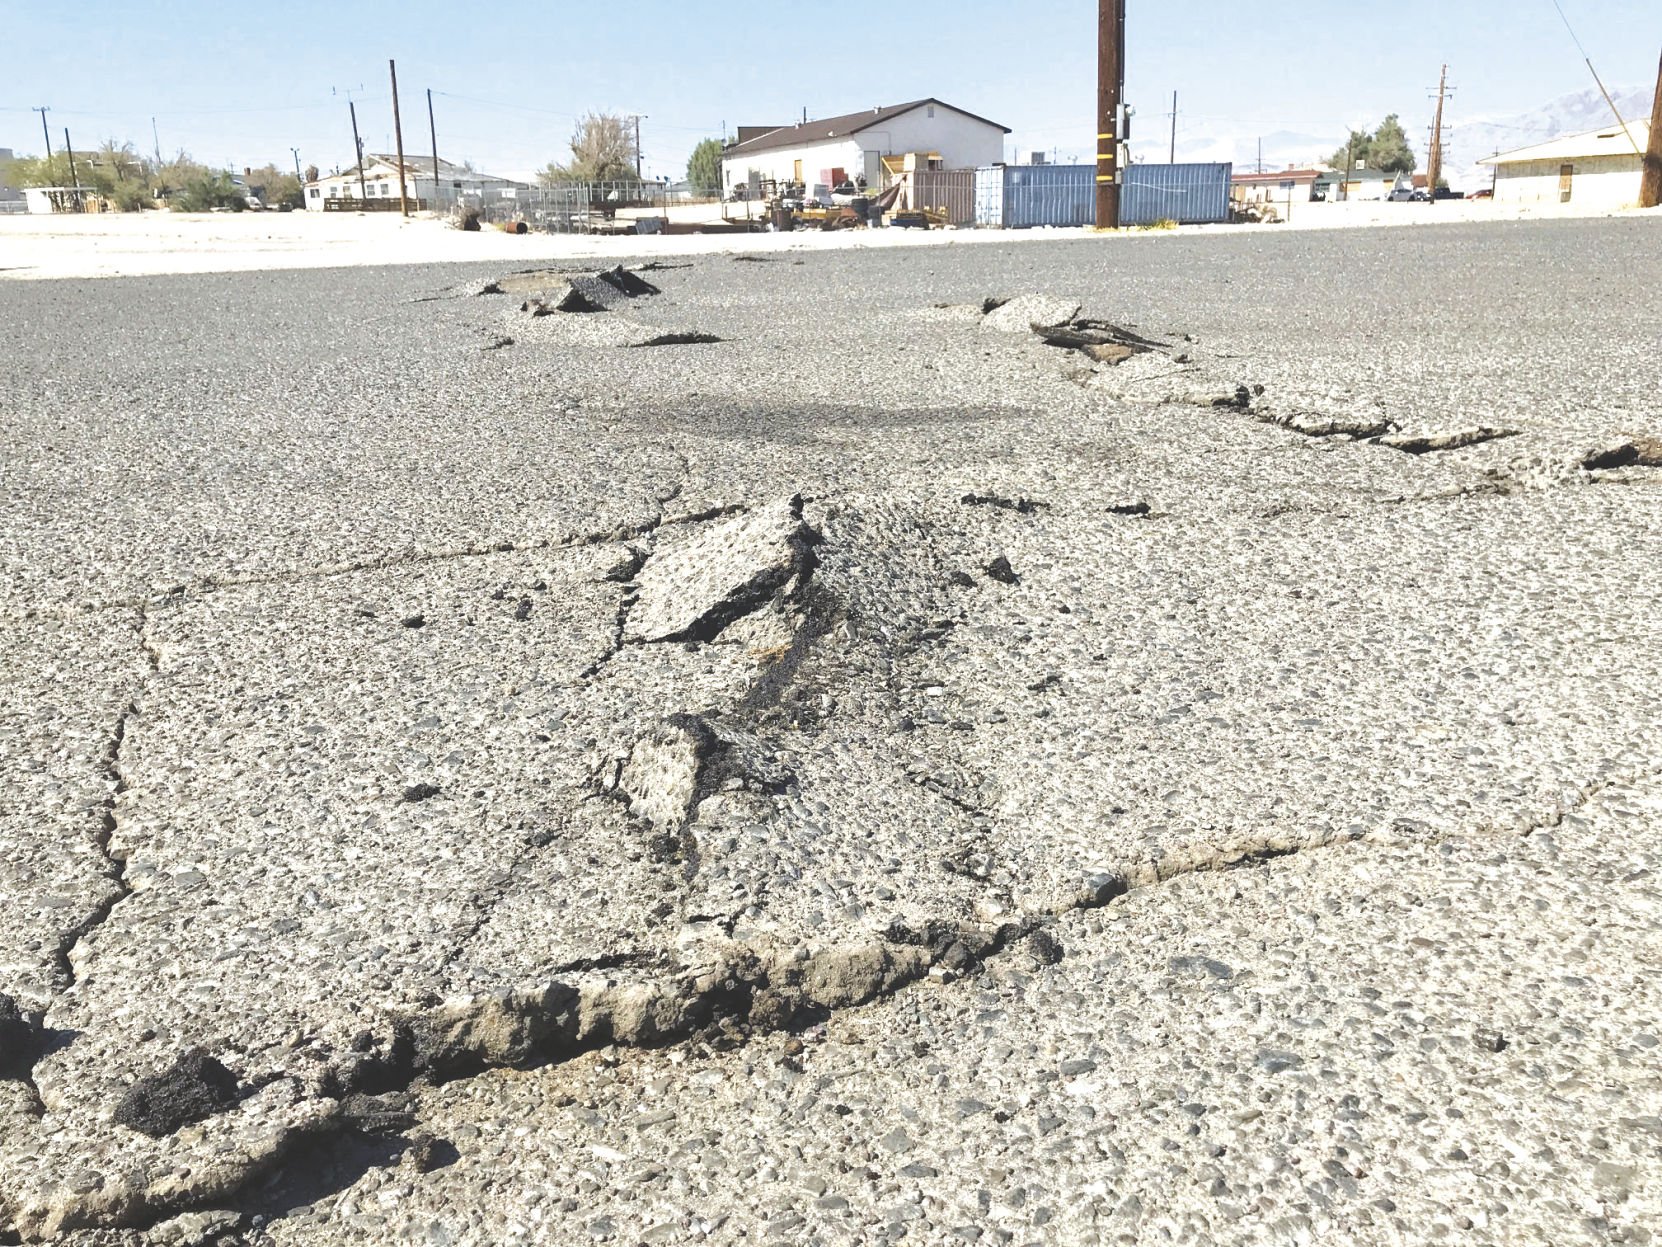 recent california earthquakes